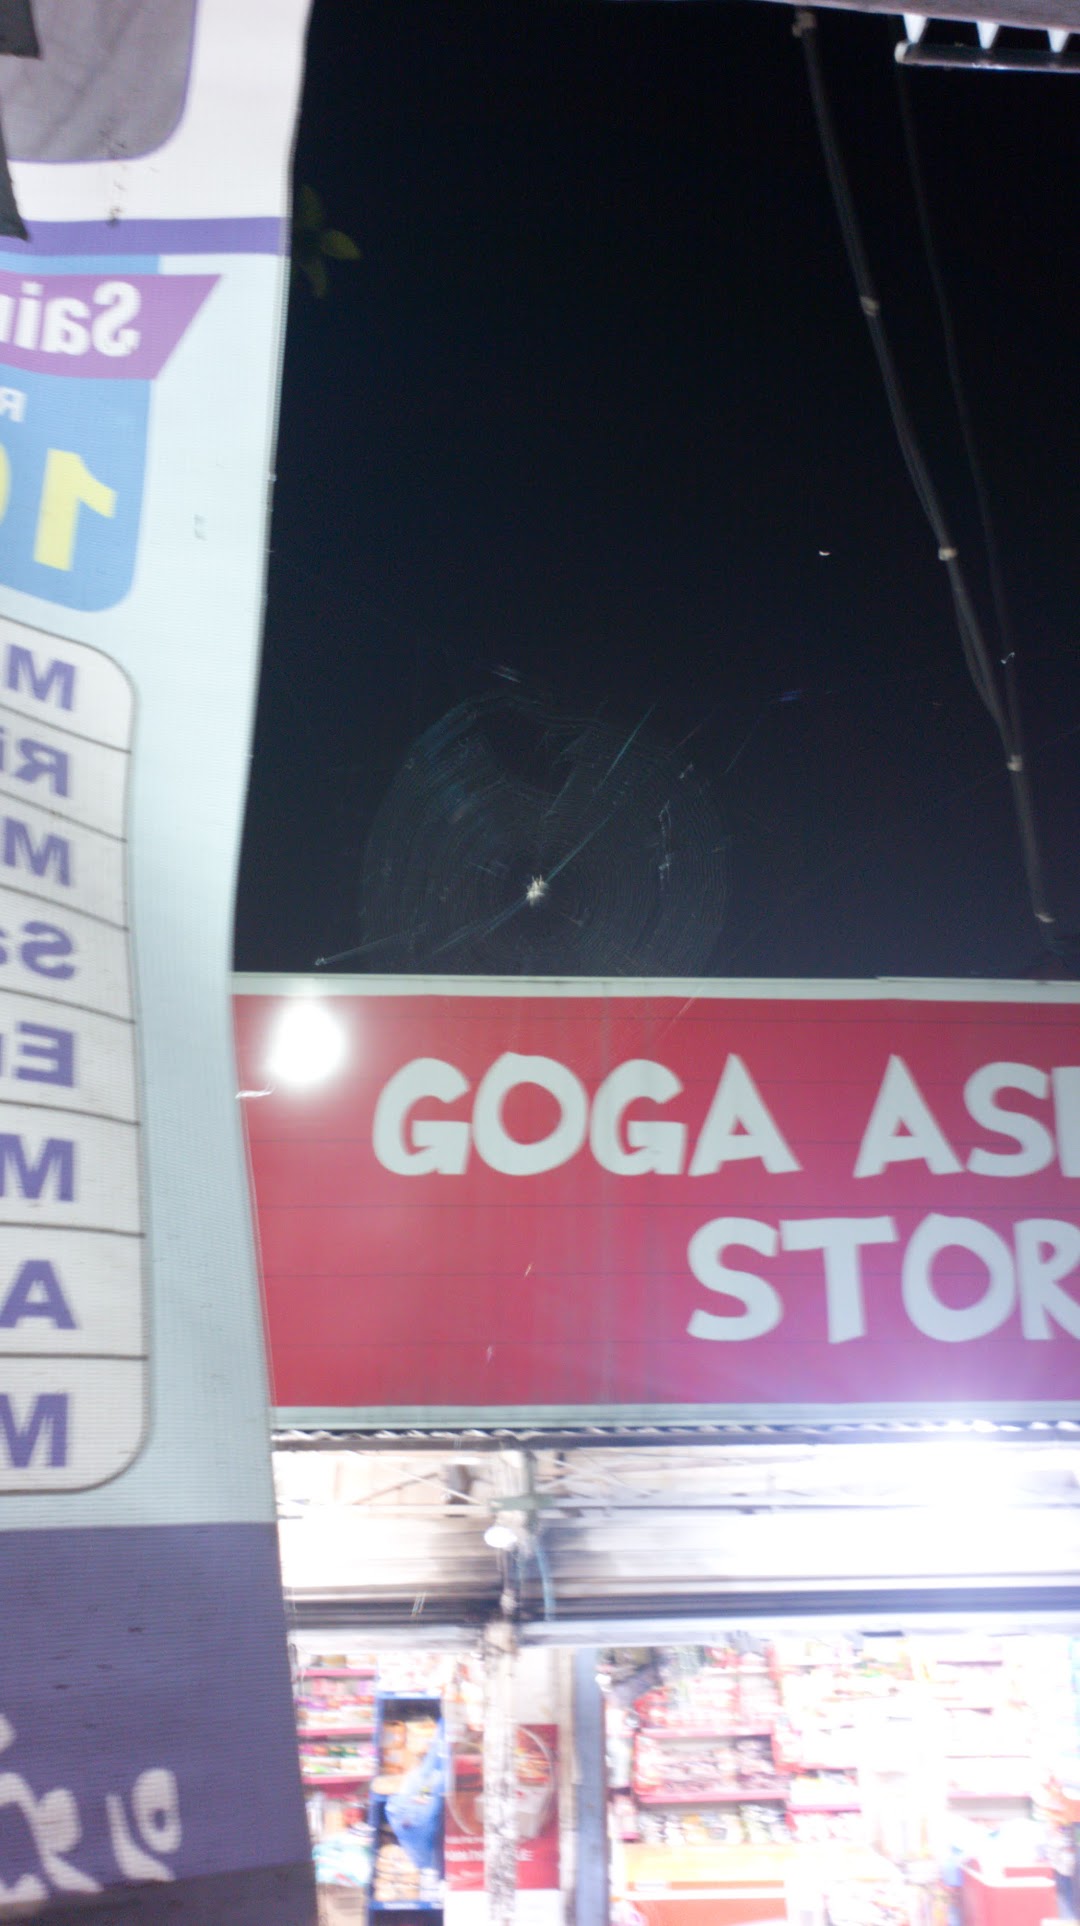 Goga General Store